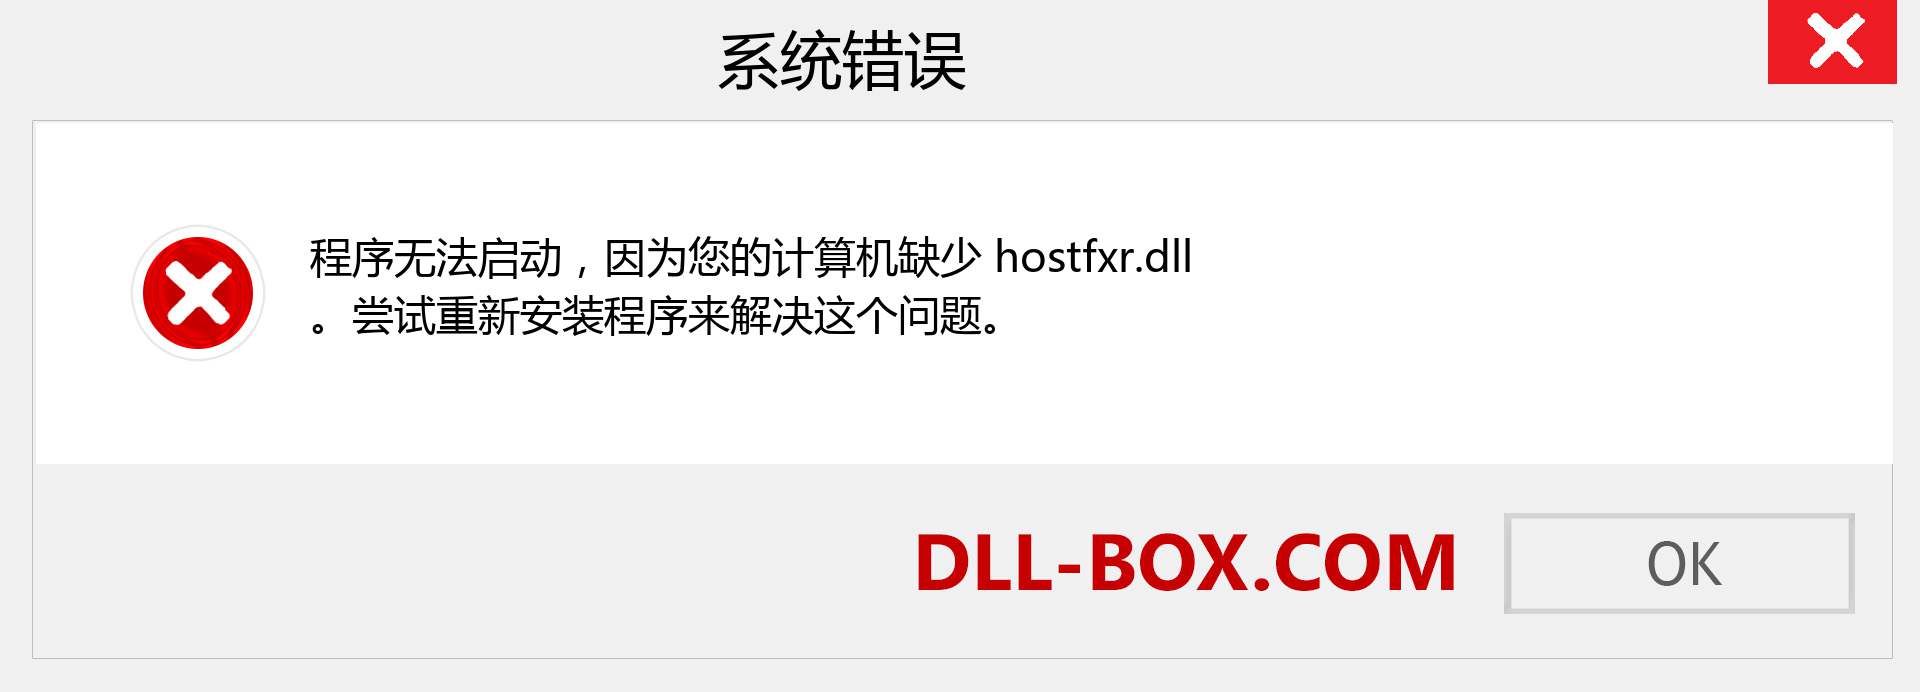 hostfxr.dll 文件丢失？。 适用于 Windows 7、8、10 的下载 - 修复 Windows、照片、图像上的 hostfxr dll 丢失错误